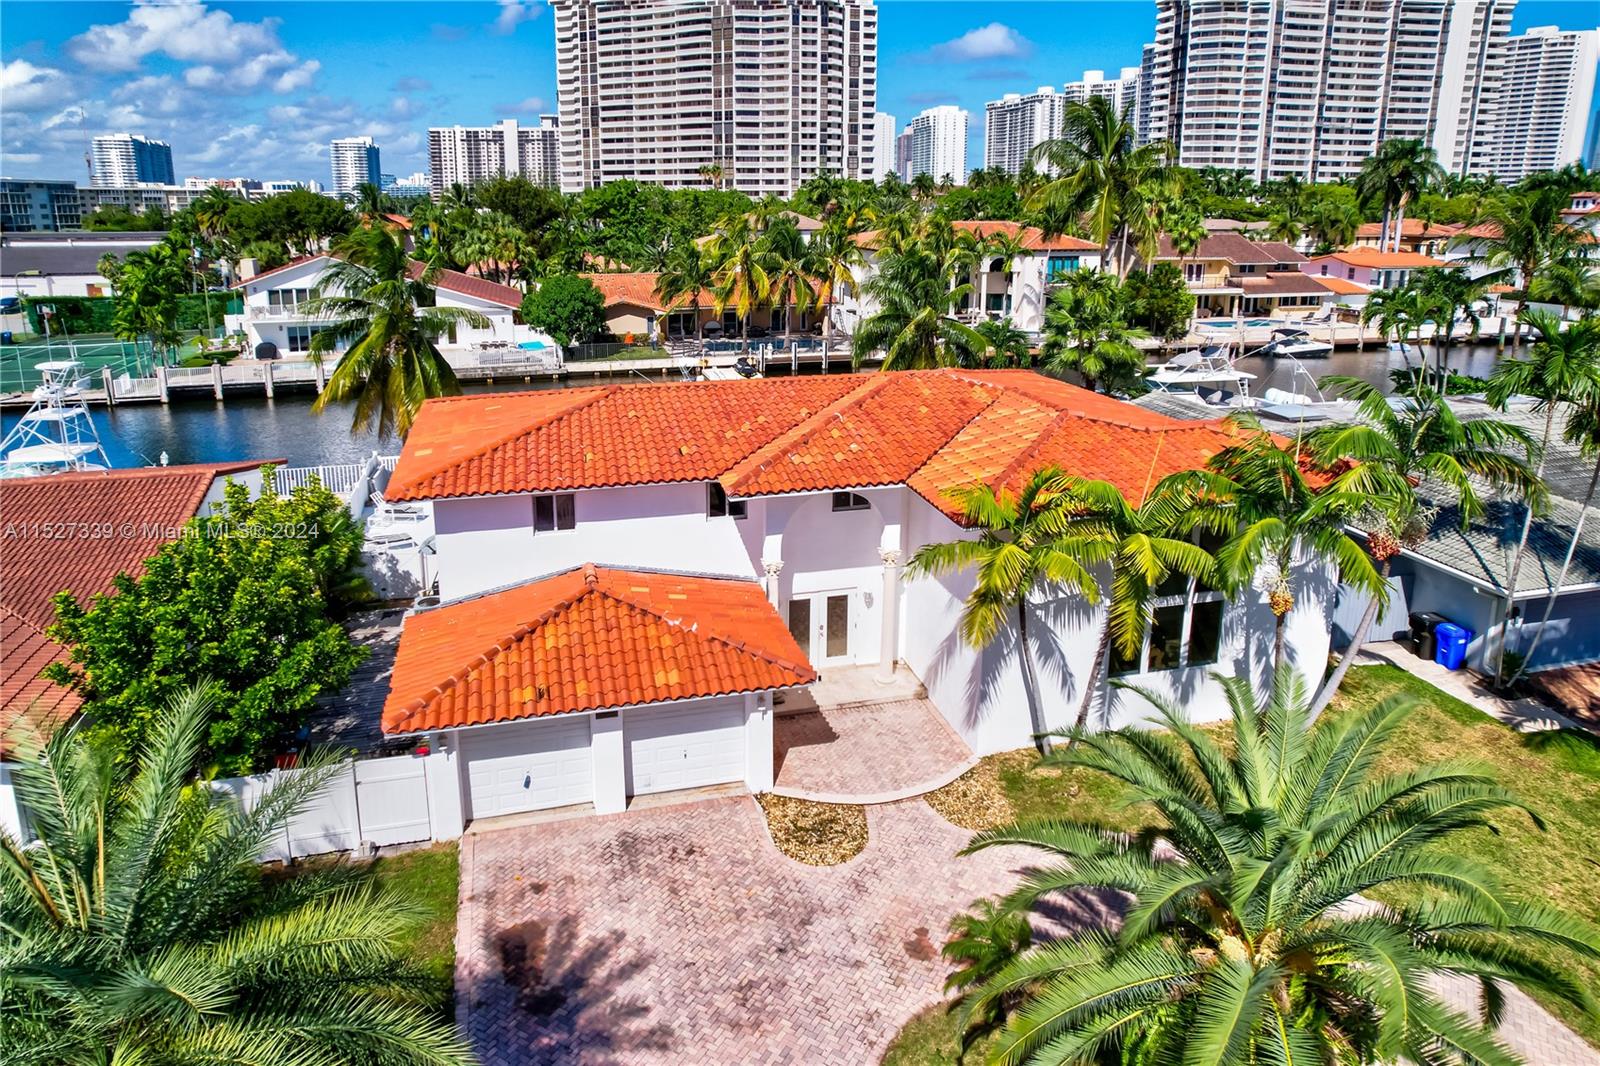 Property for Sale at 3341 Ne 170th St, North Miami Beach, Miami-Dade County, Florida - Bedrooms: 4 
Bathrooms: 4  - $2,699,000